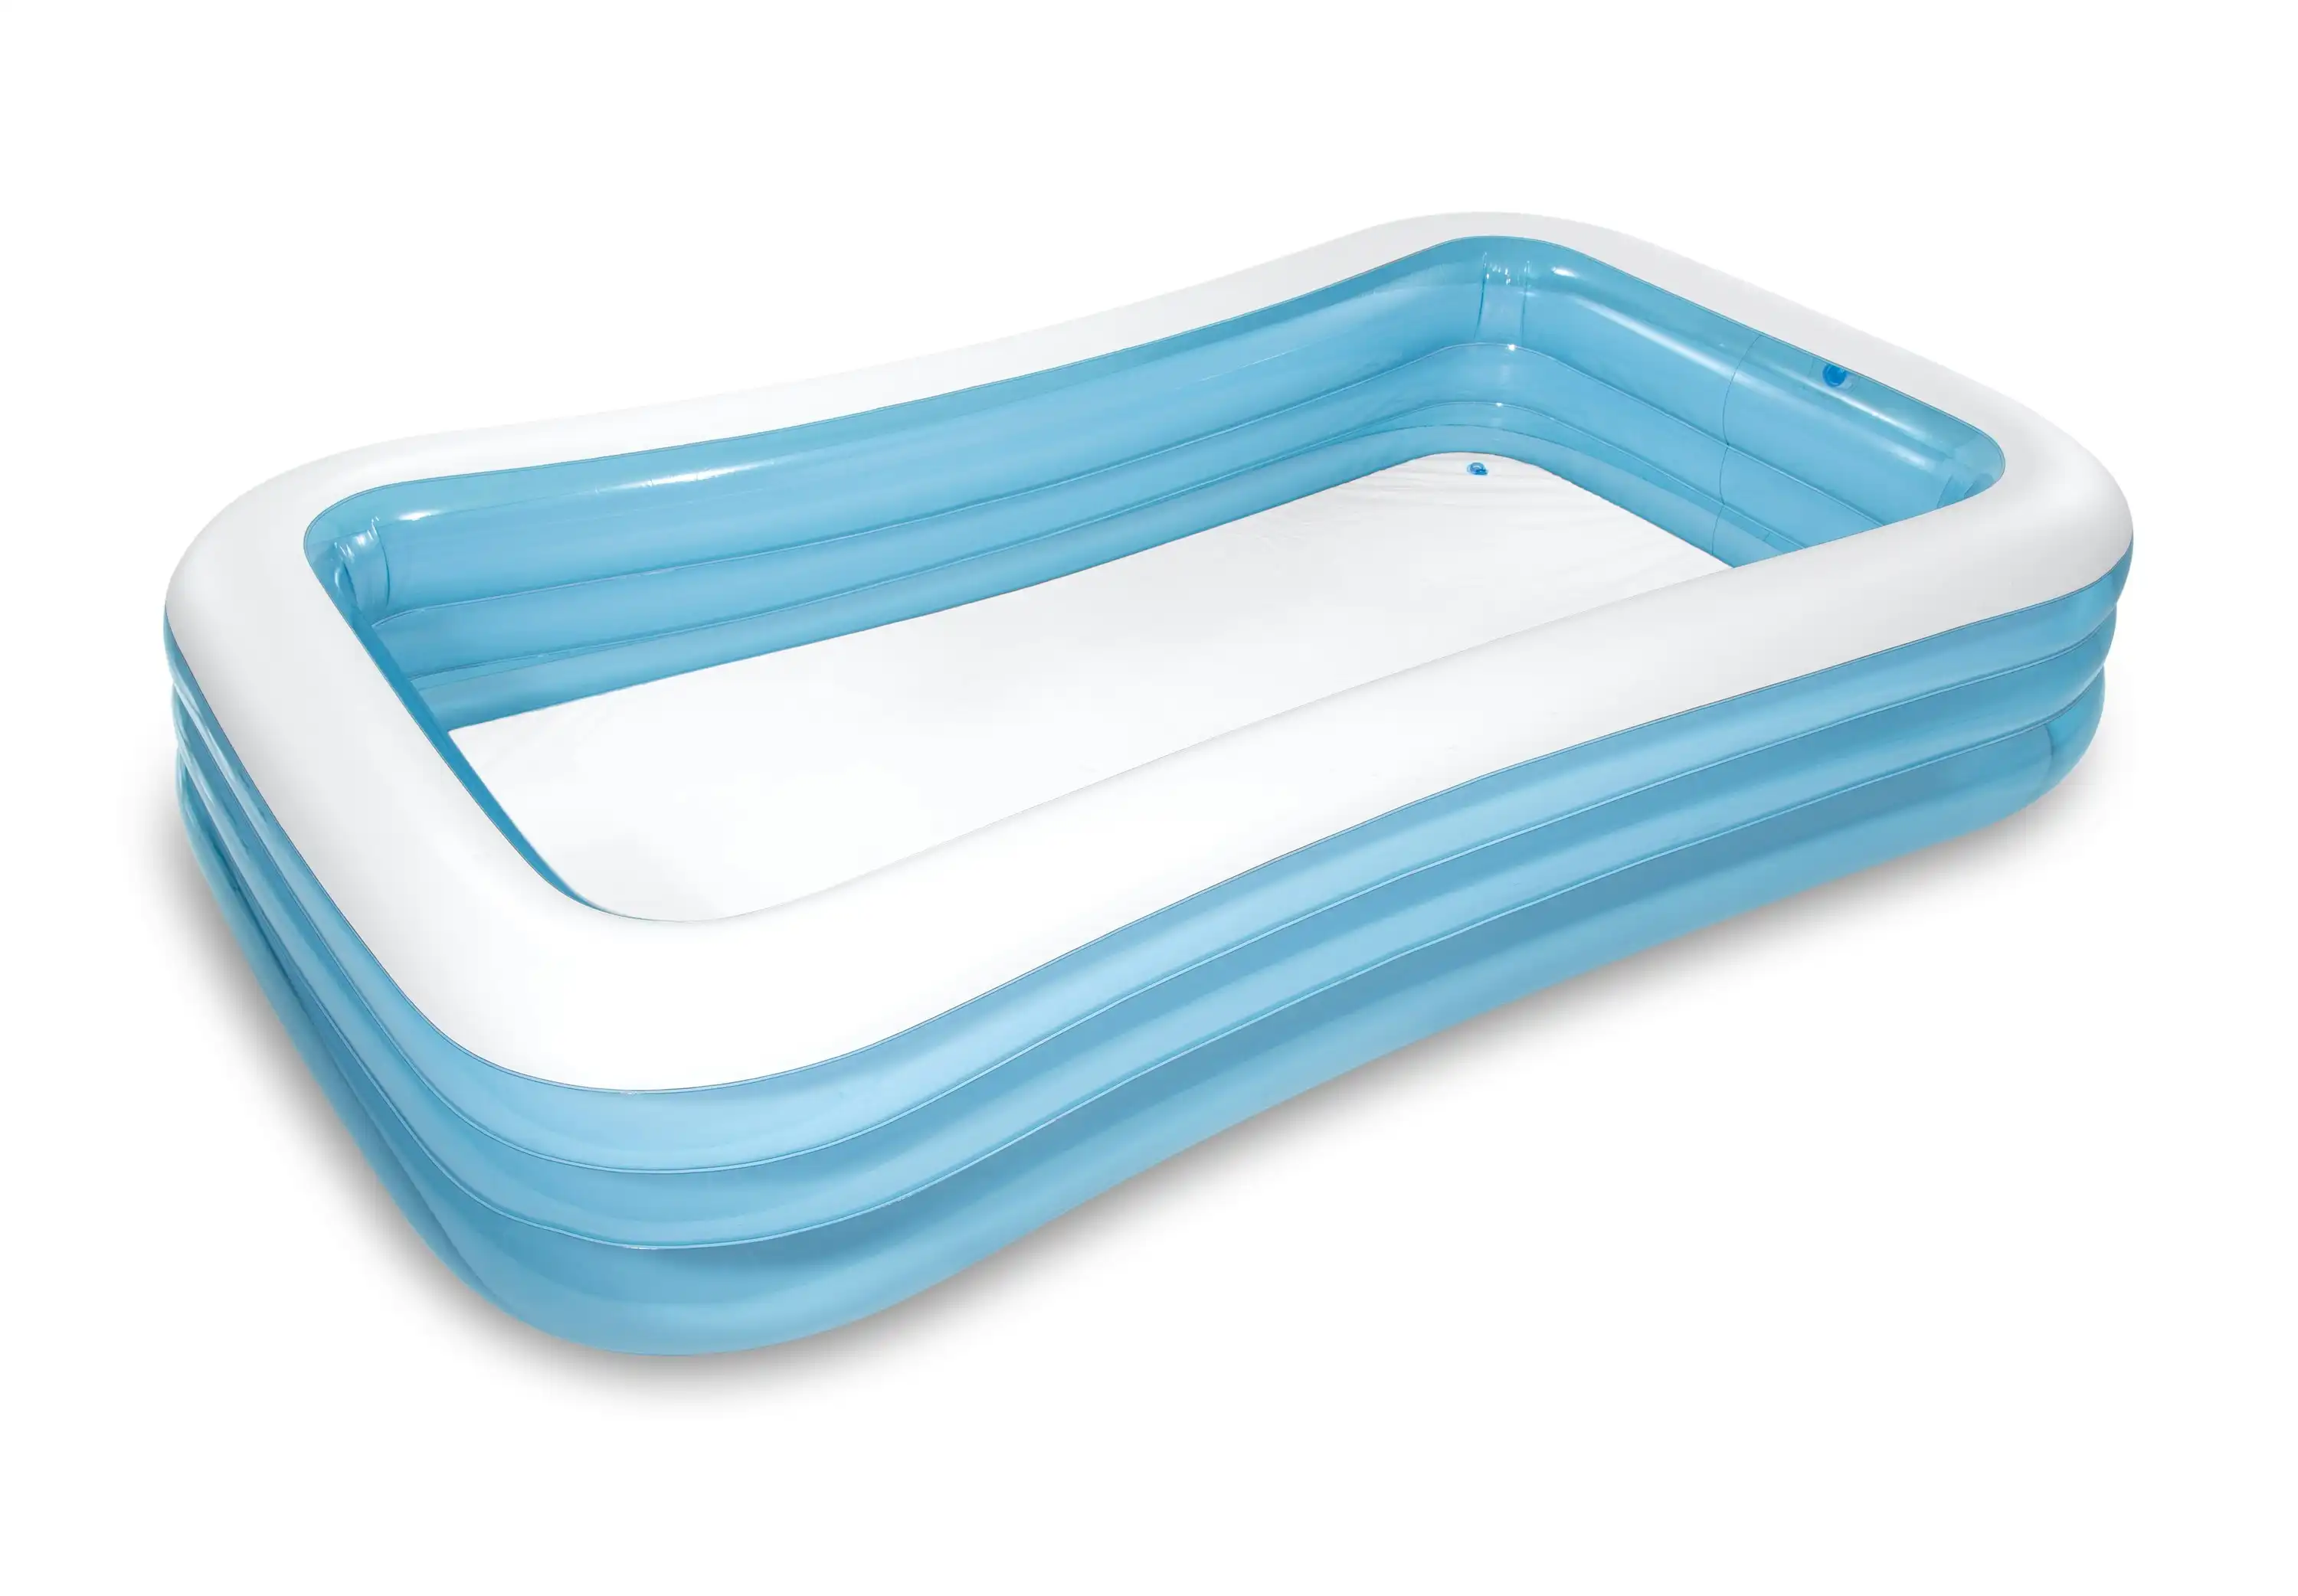 Intex Swim Center Family Inflatable Pool 58484